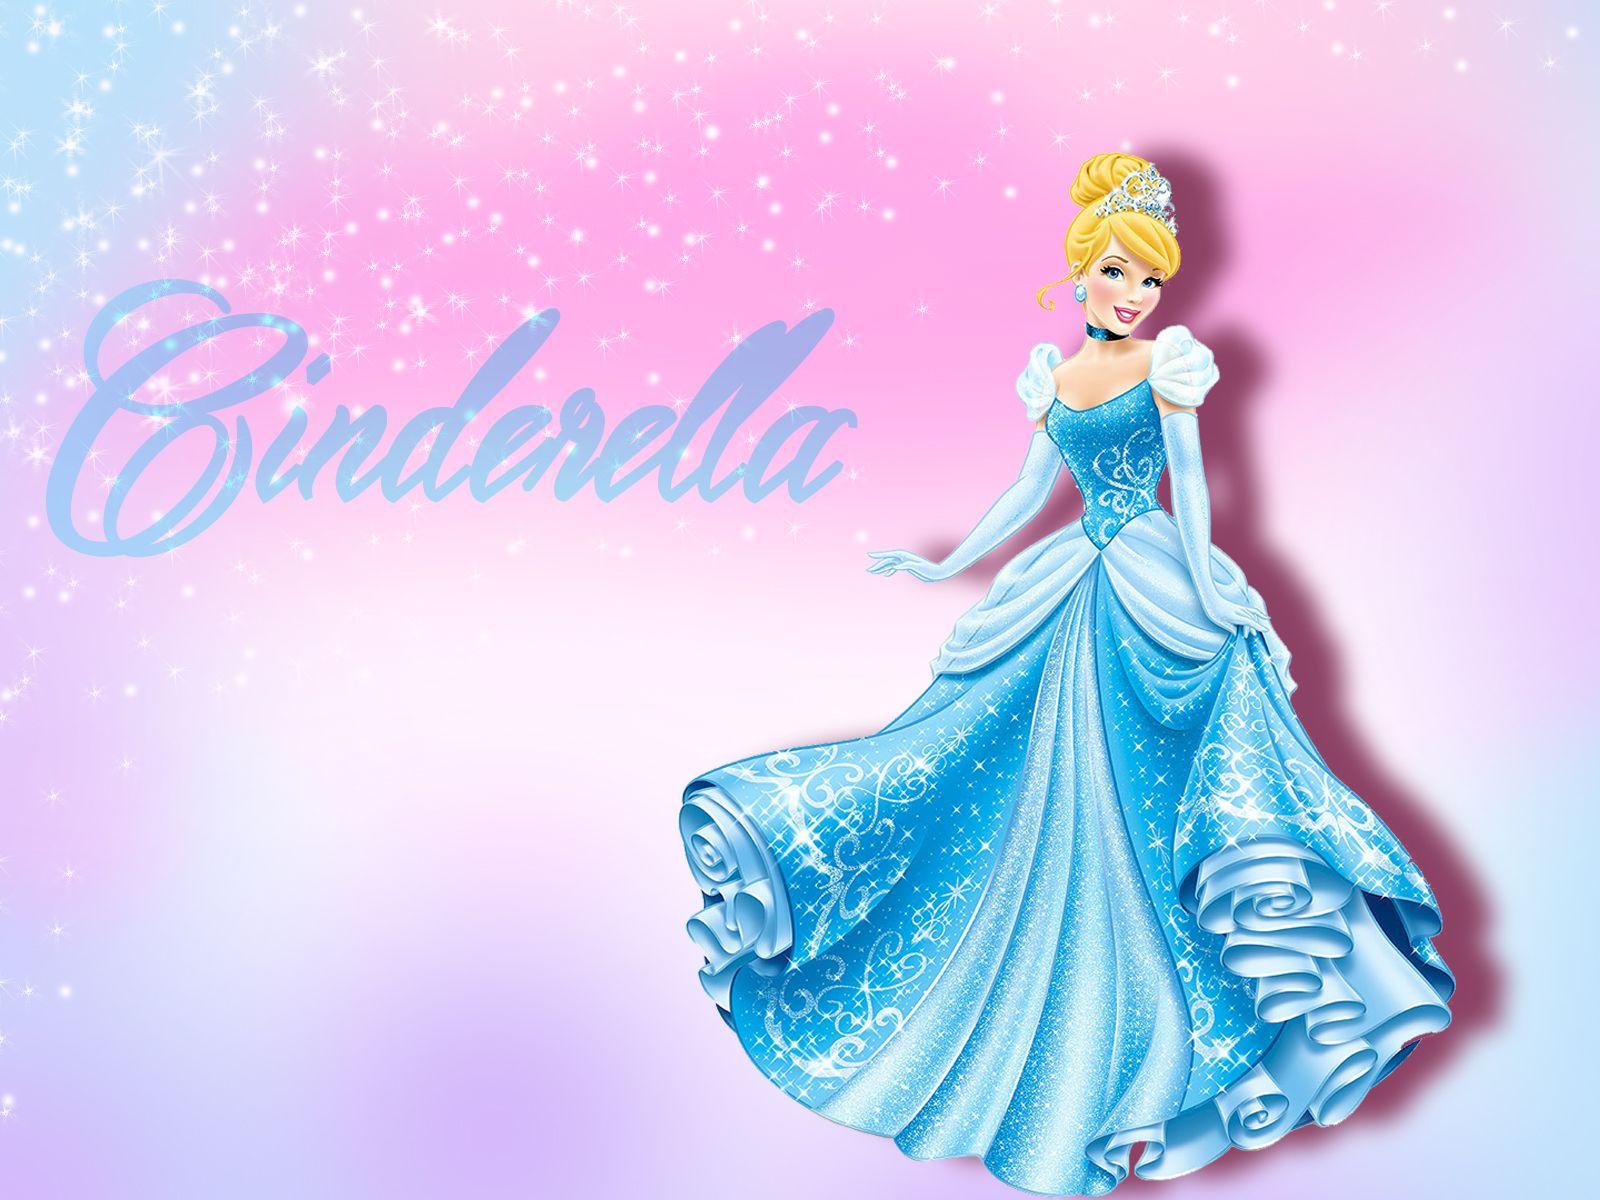 Cinderella Cartoon Wallpaper